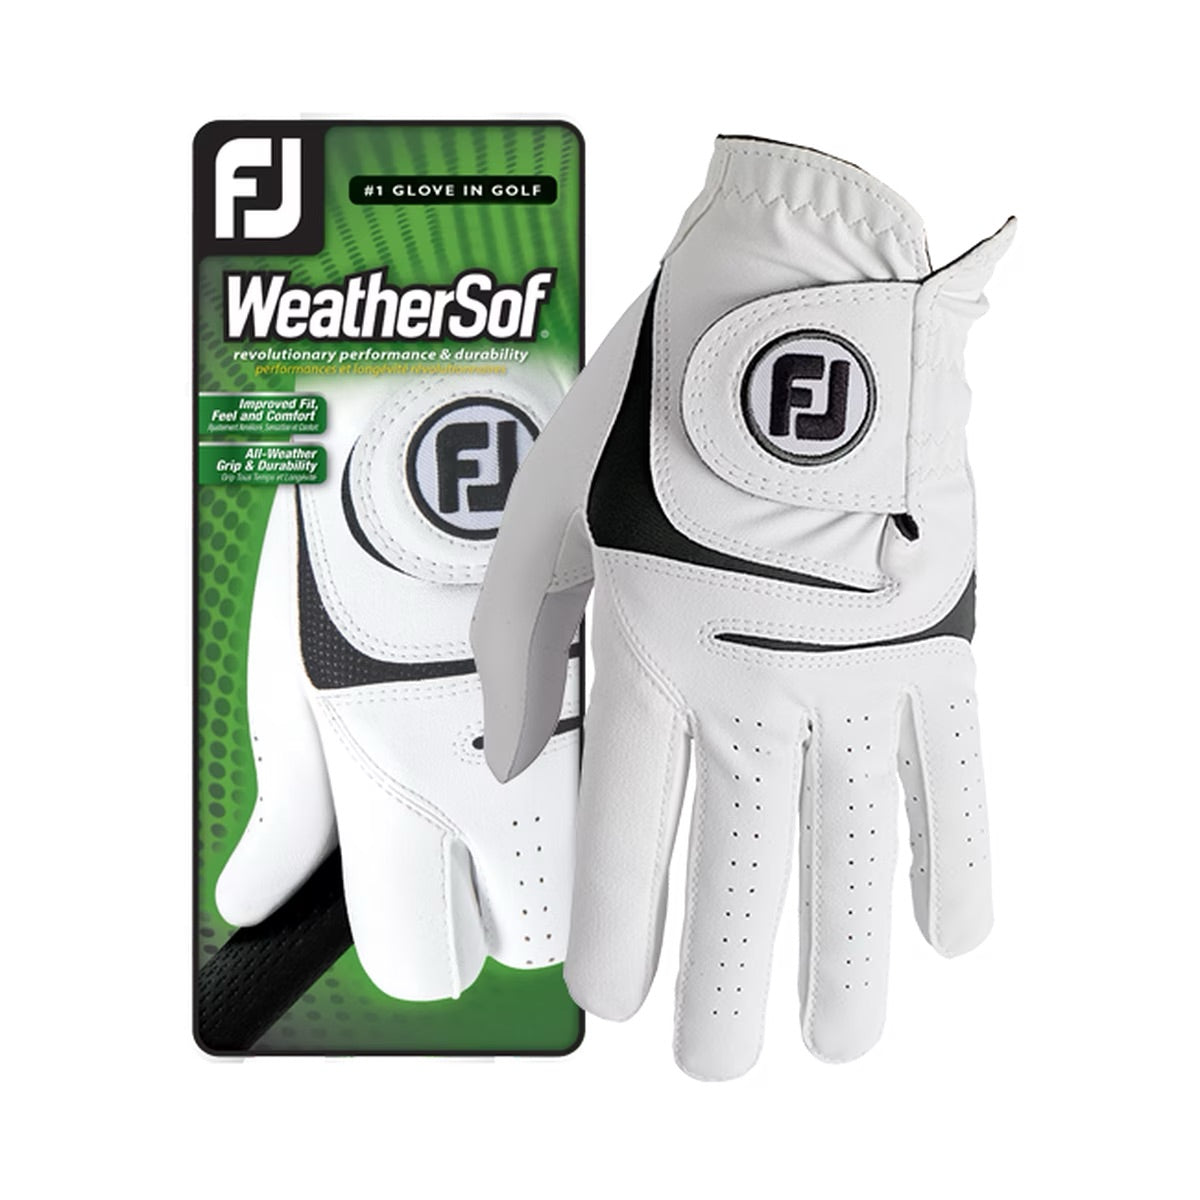 Footjoy Weathersof Gloves